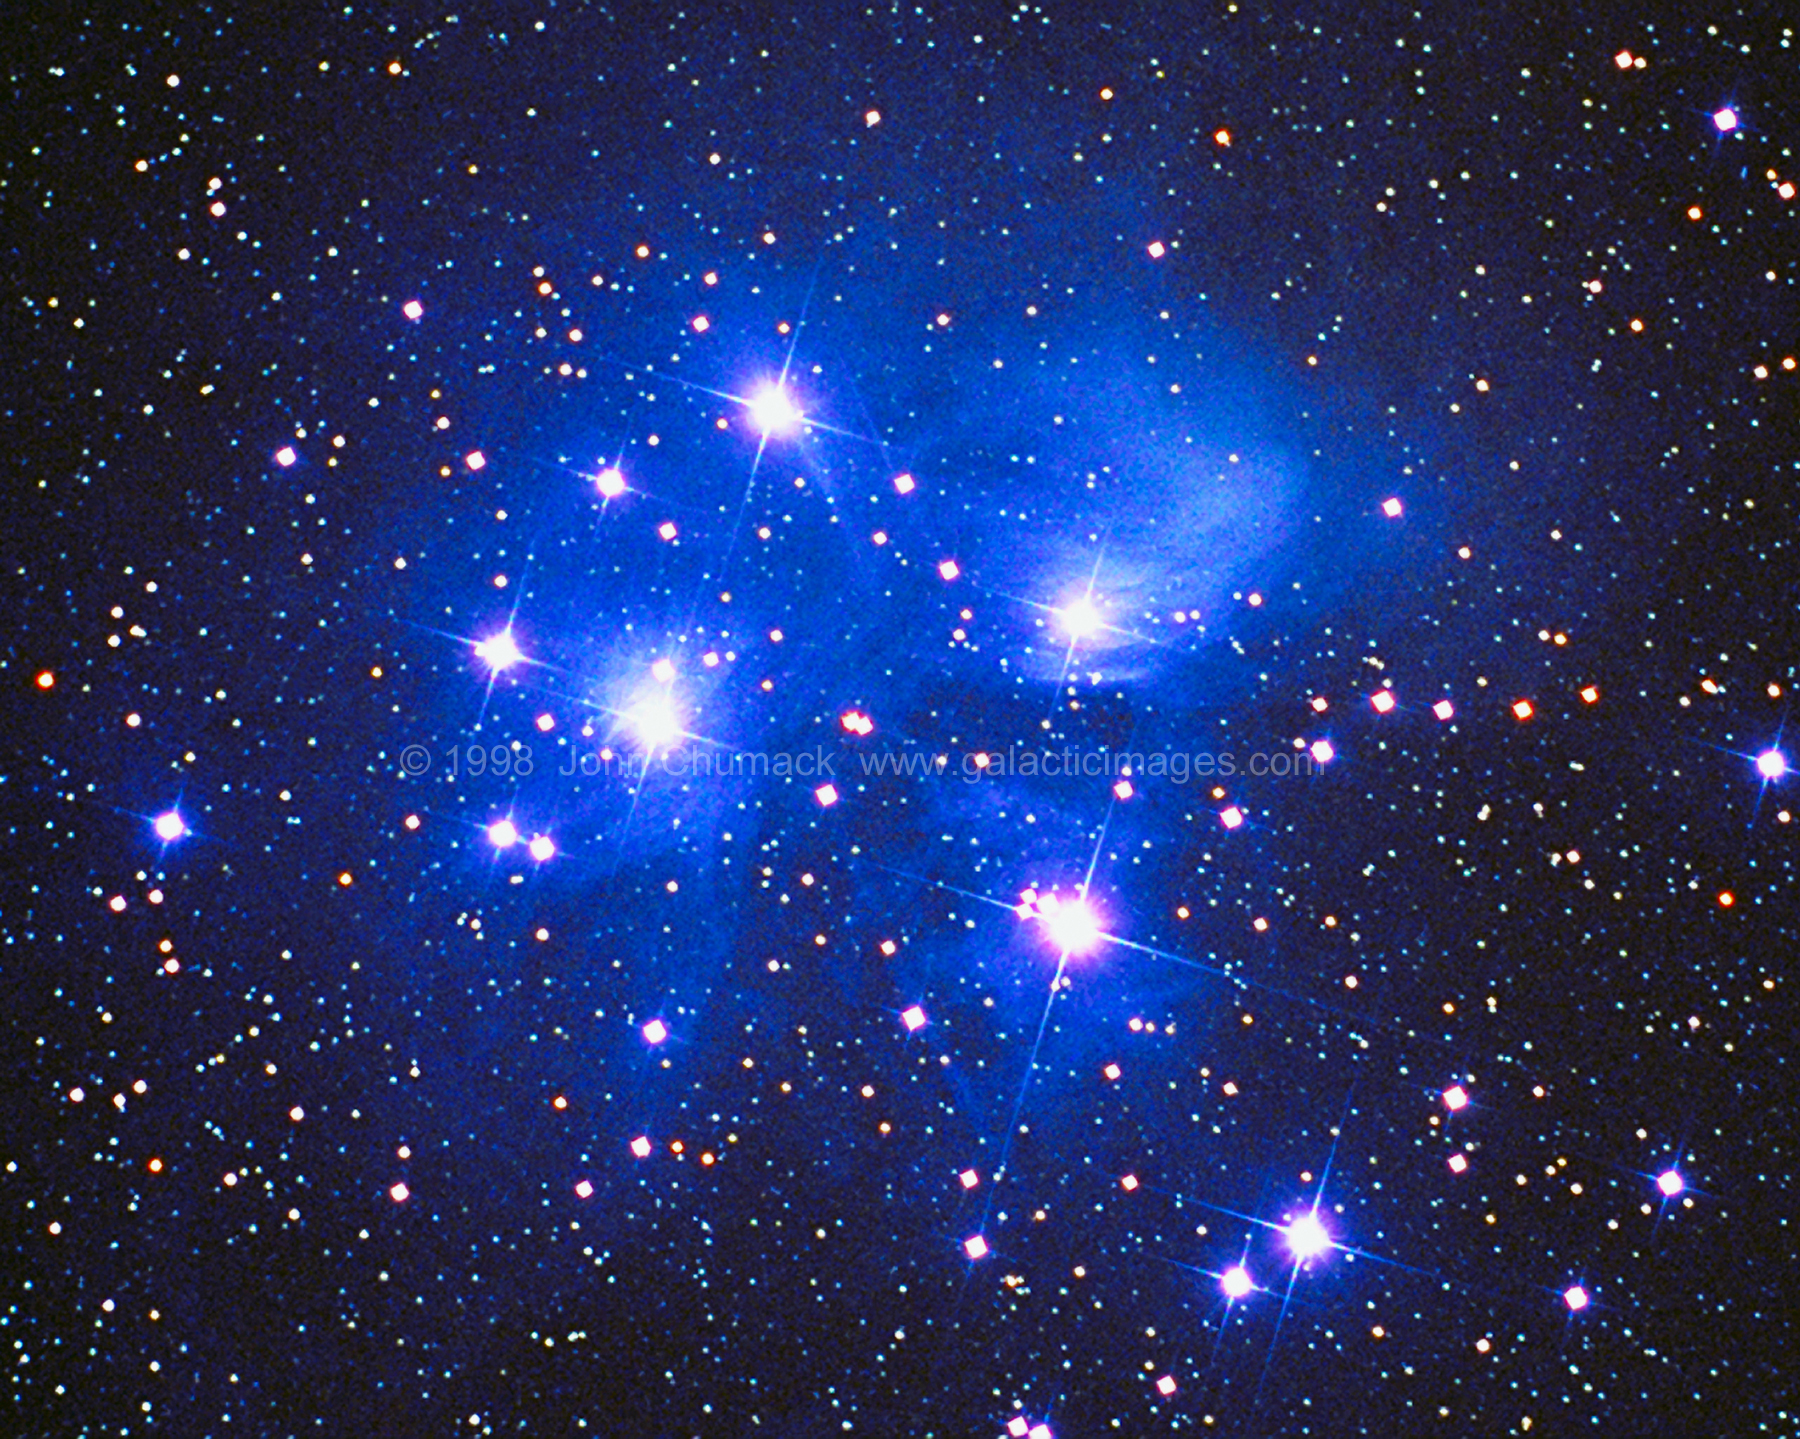 Pleiades New 11x14 Space Photo Stars in Constellation of Taurus 